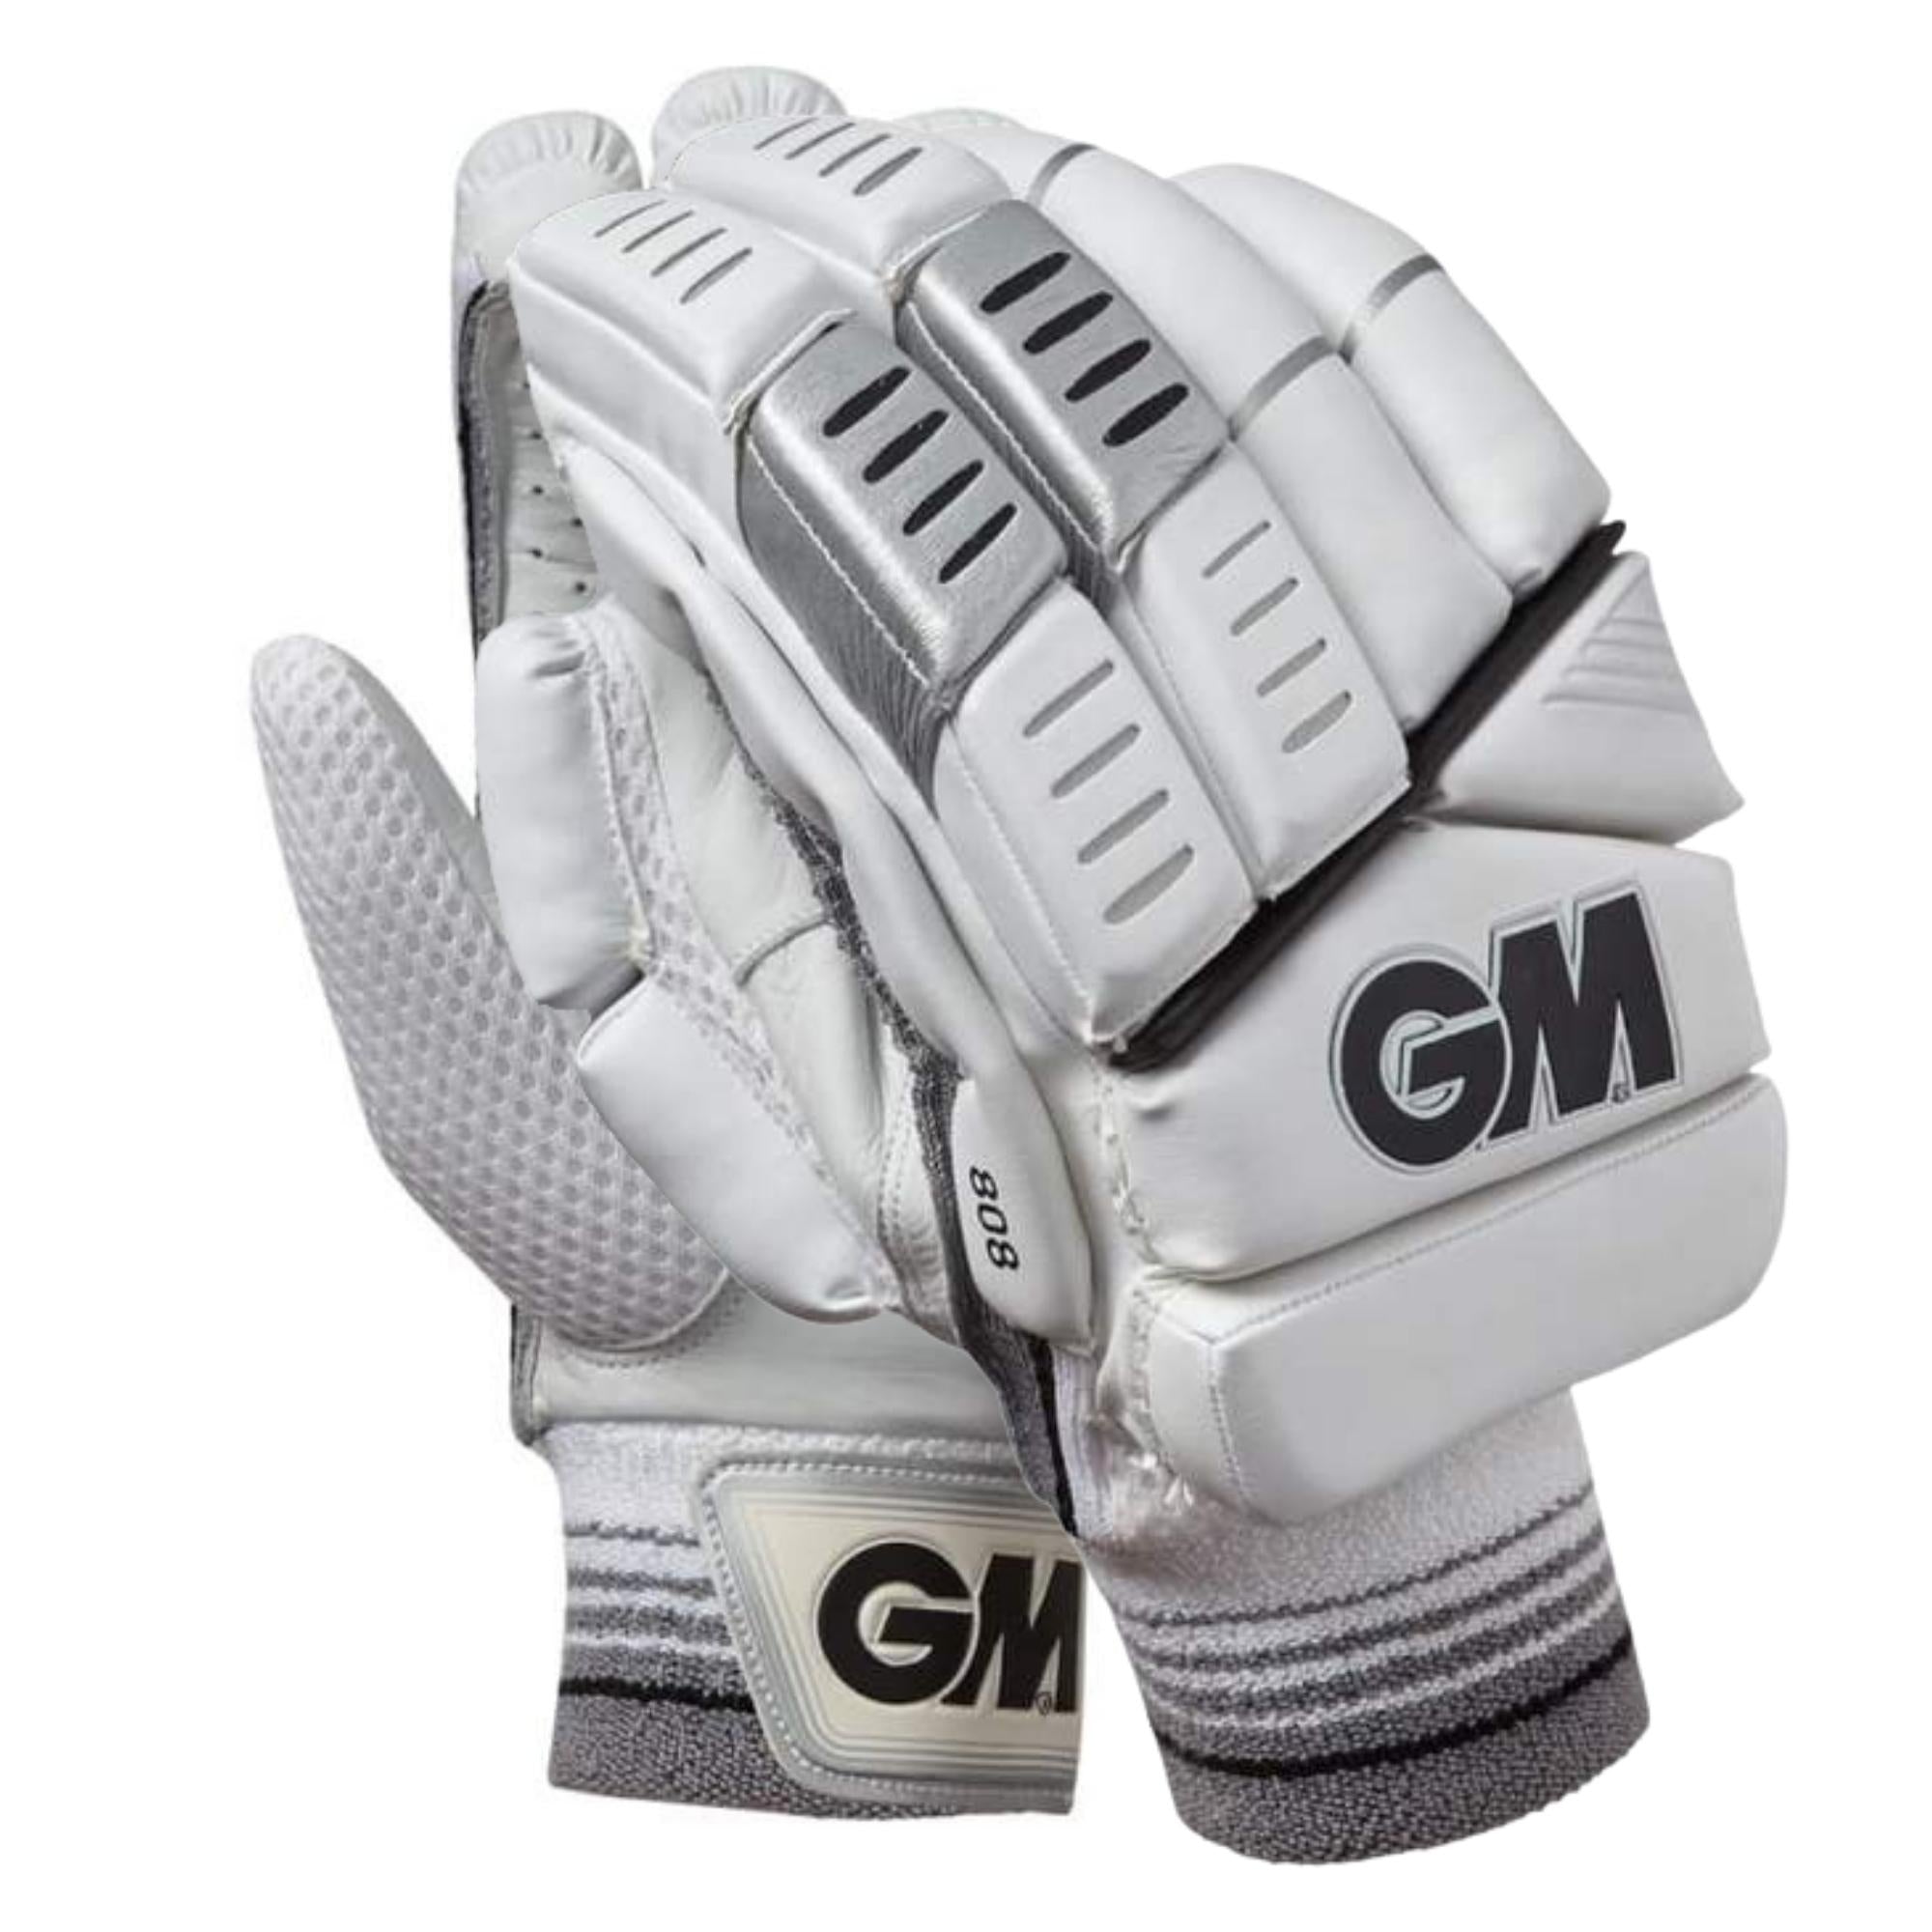 GM Cricket Batting Gloves 808 White & Silver